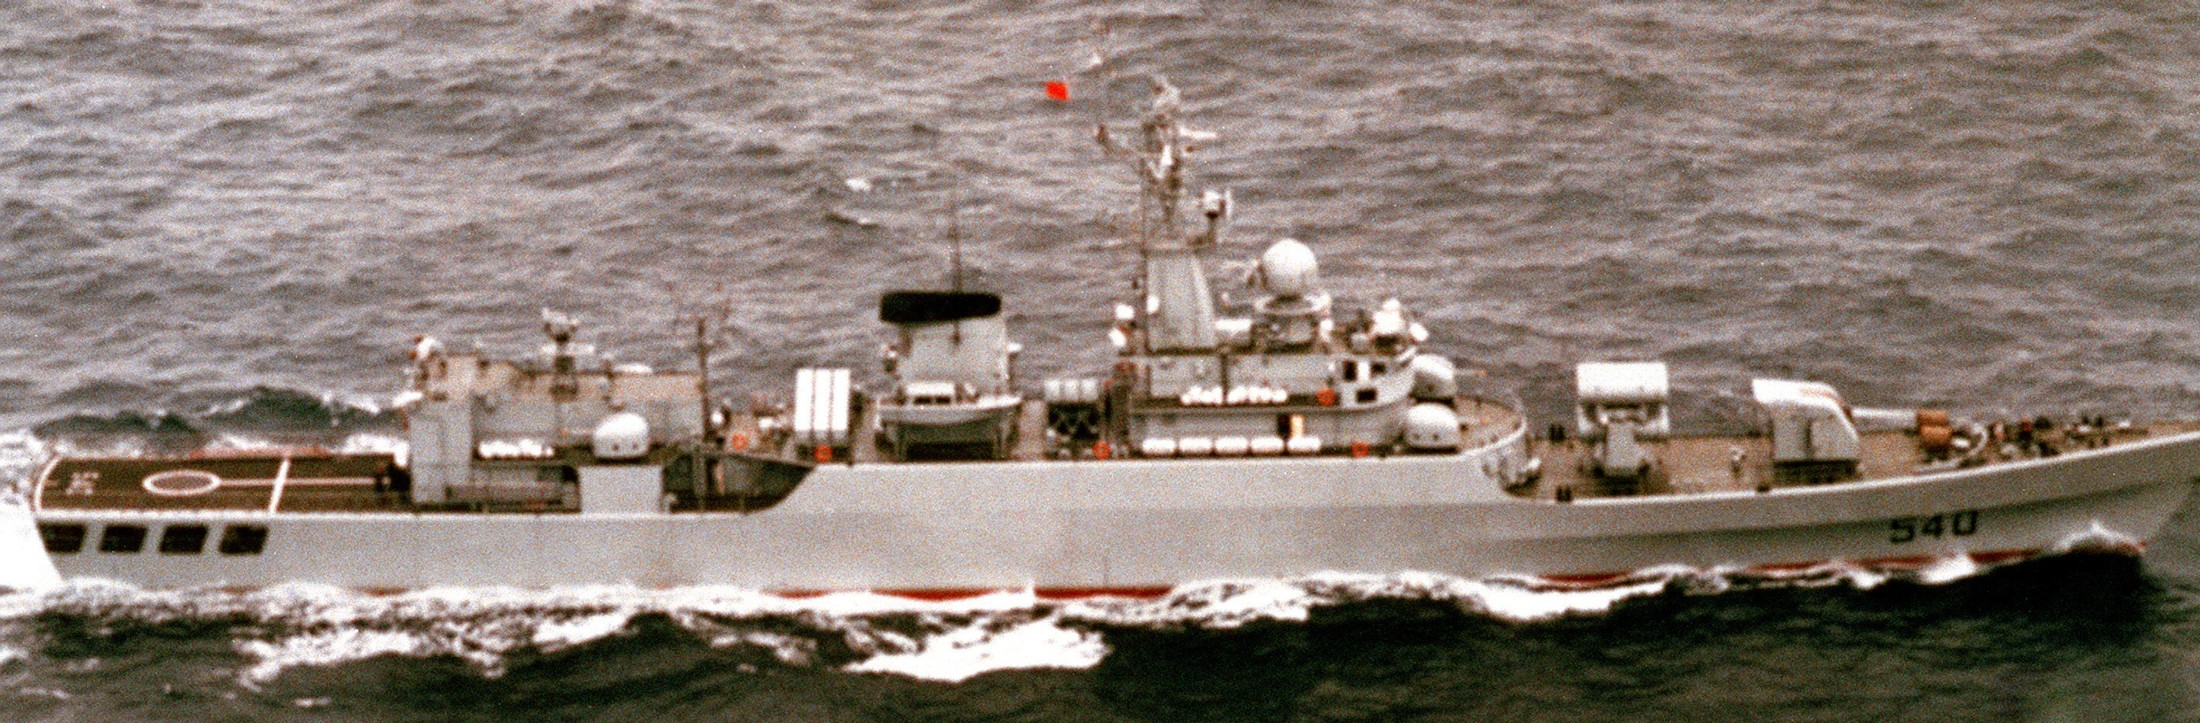 ff-540 plans huainan type 053h2g jiangwei-i class frigate china people's liberation army navy 03